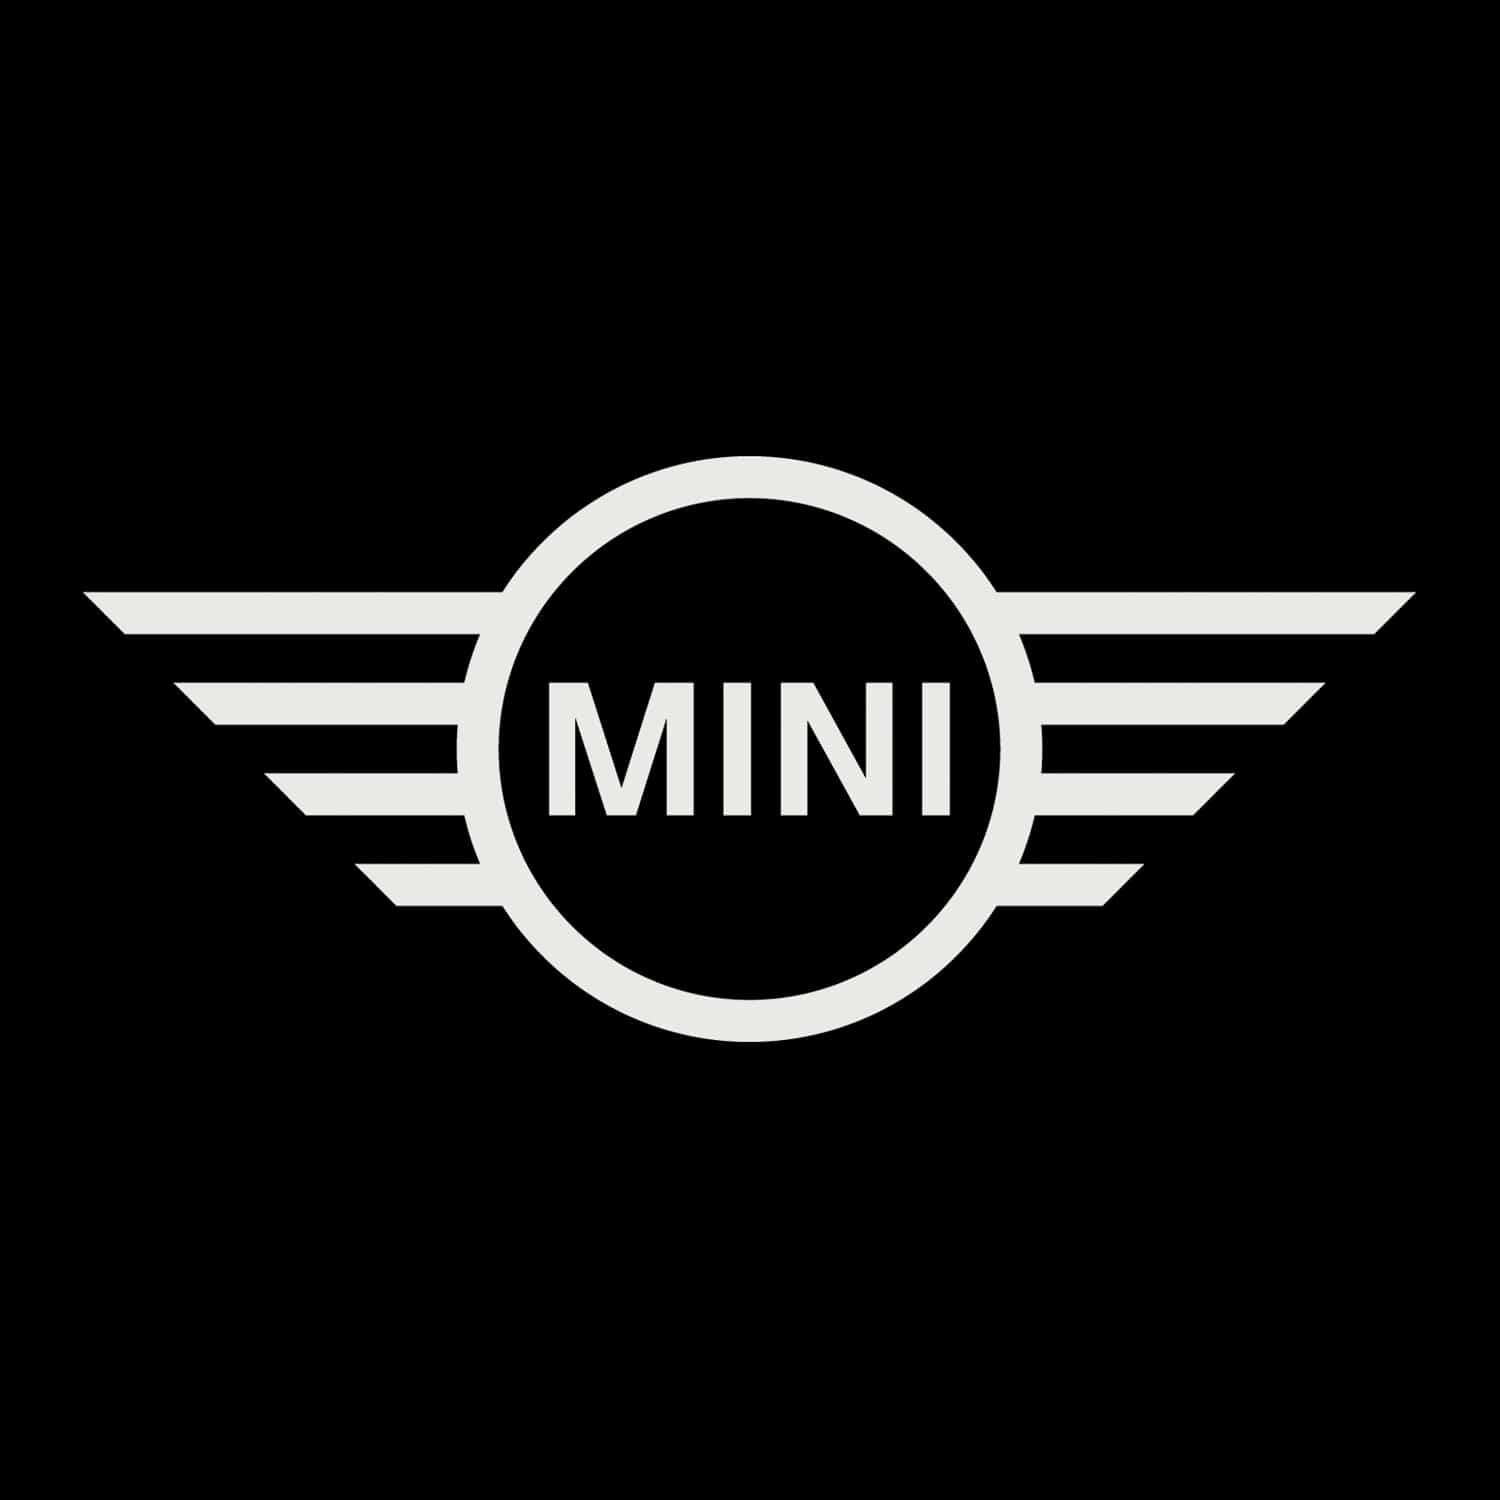 BMW Mini Logo - The New Mini Logo Design Unveiled by BMW